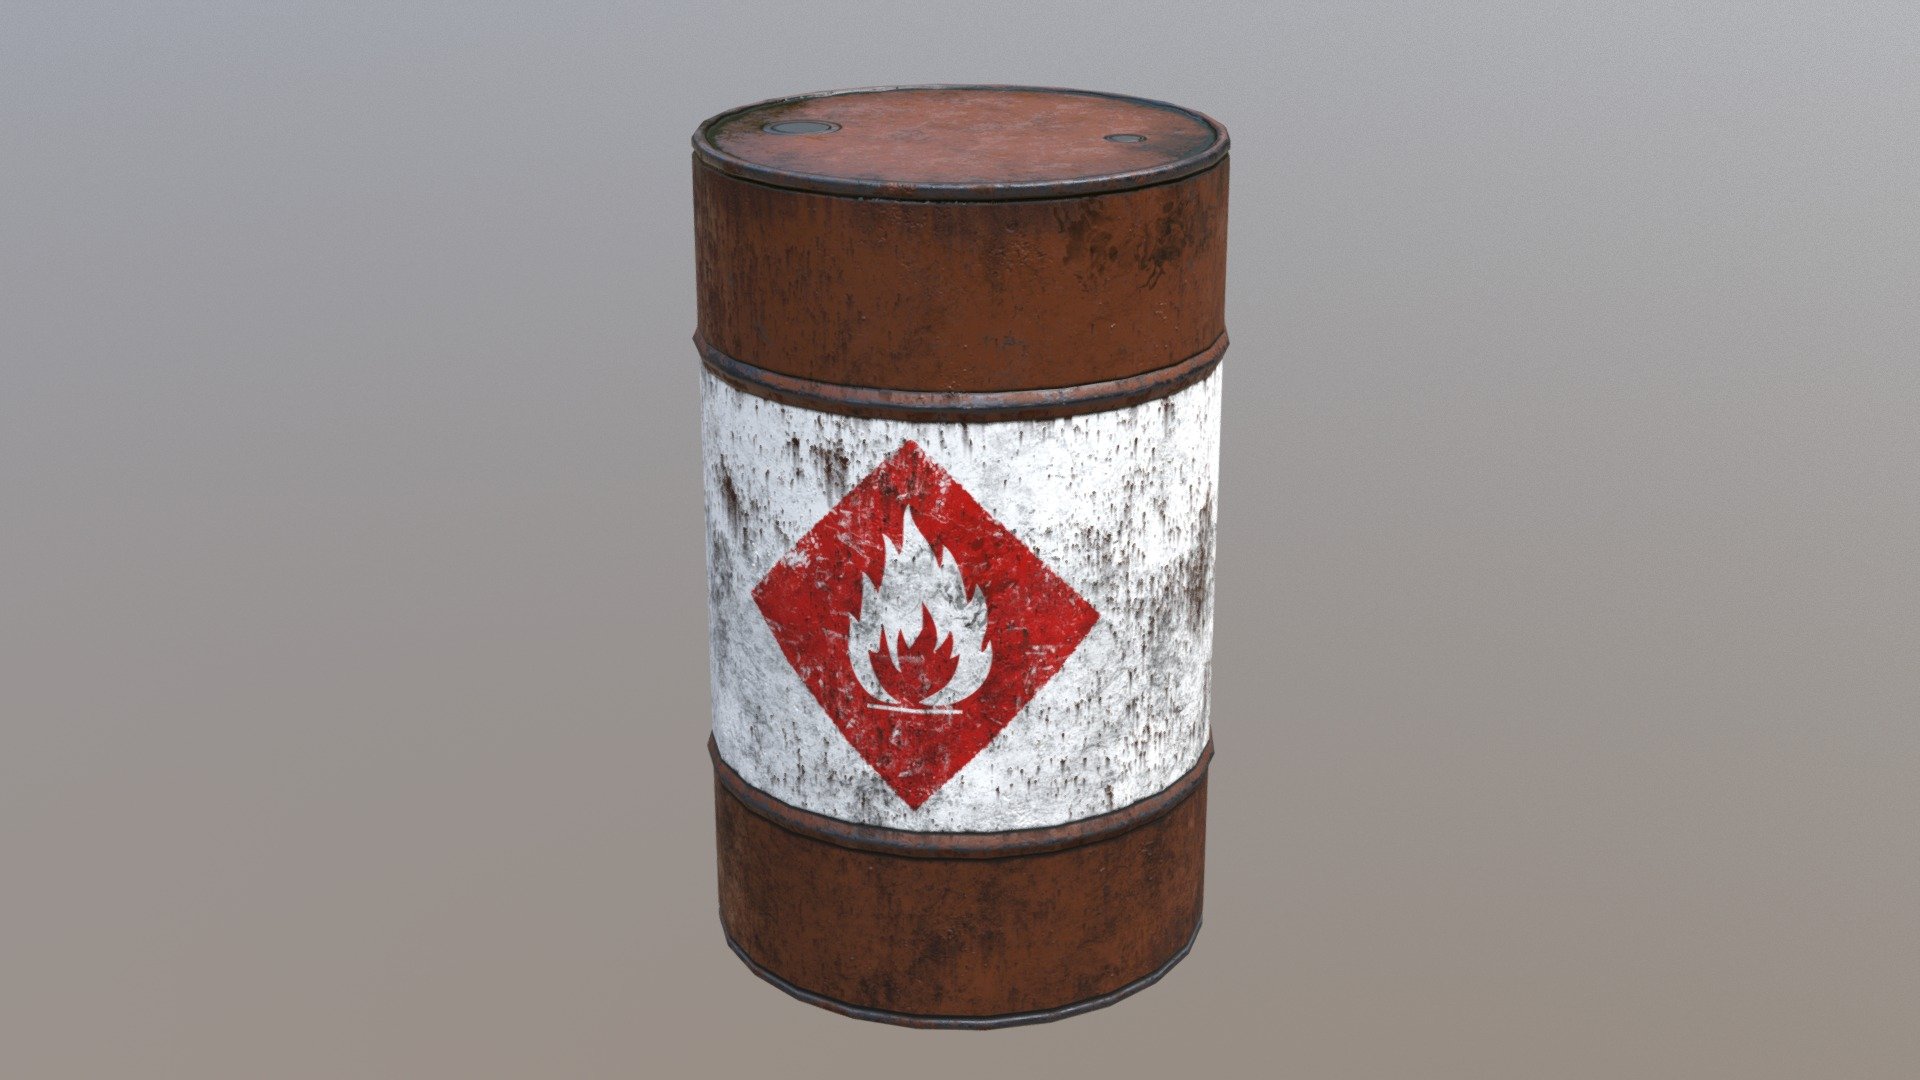 Half Life inspired explosive barrel